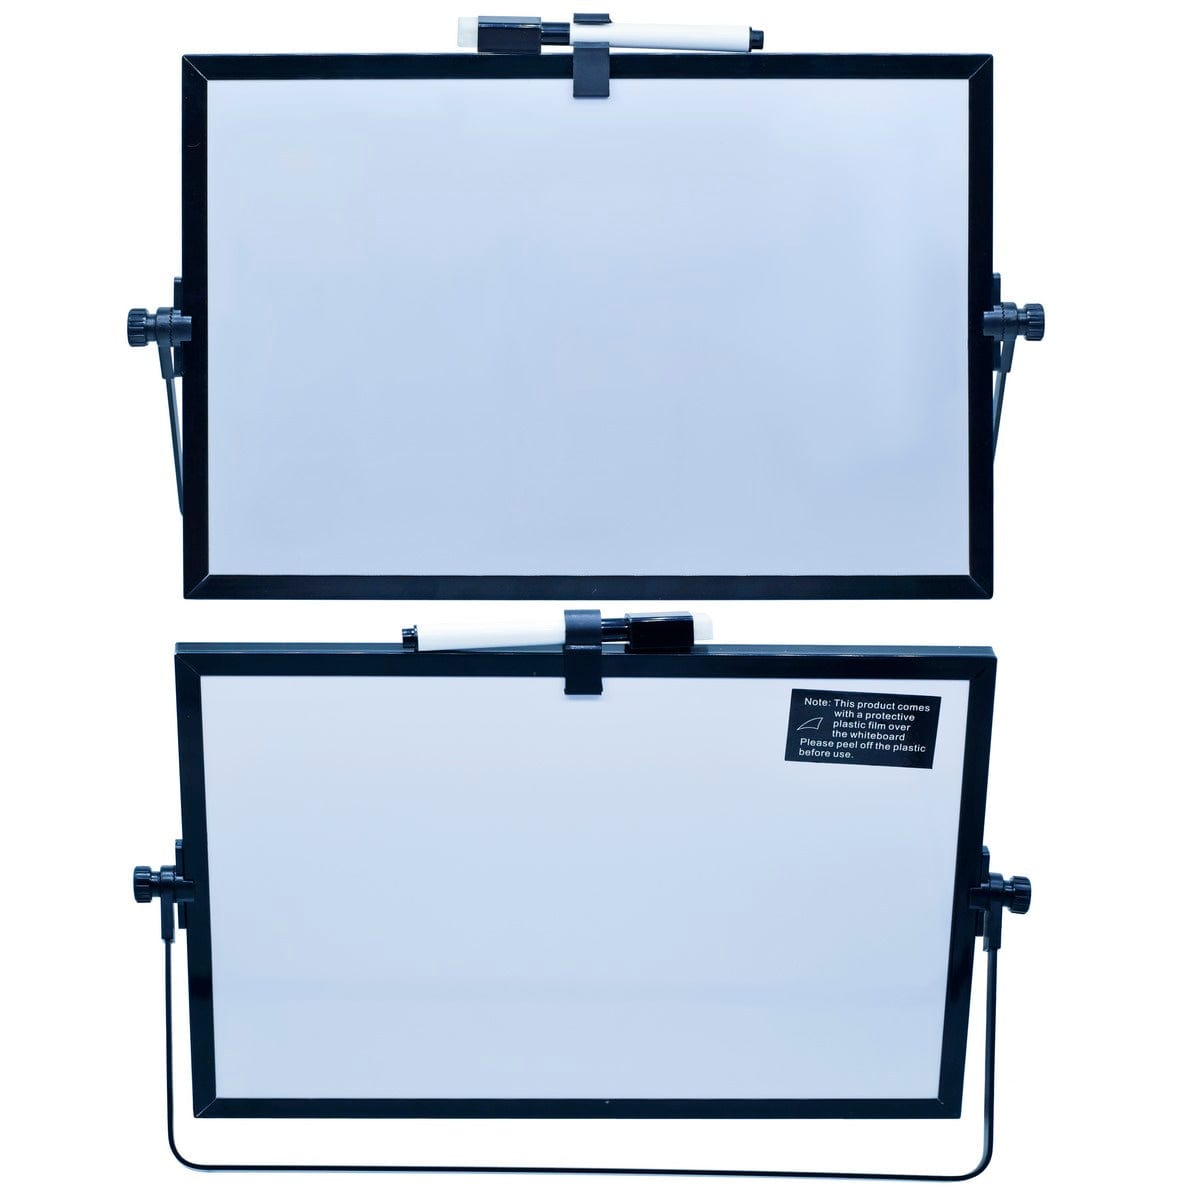 jags-mumbai Marker White Board Double Side Marker/Duster/Magnet Set